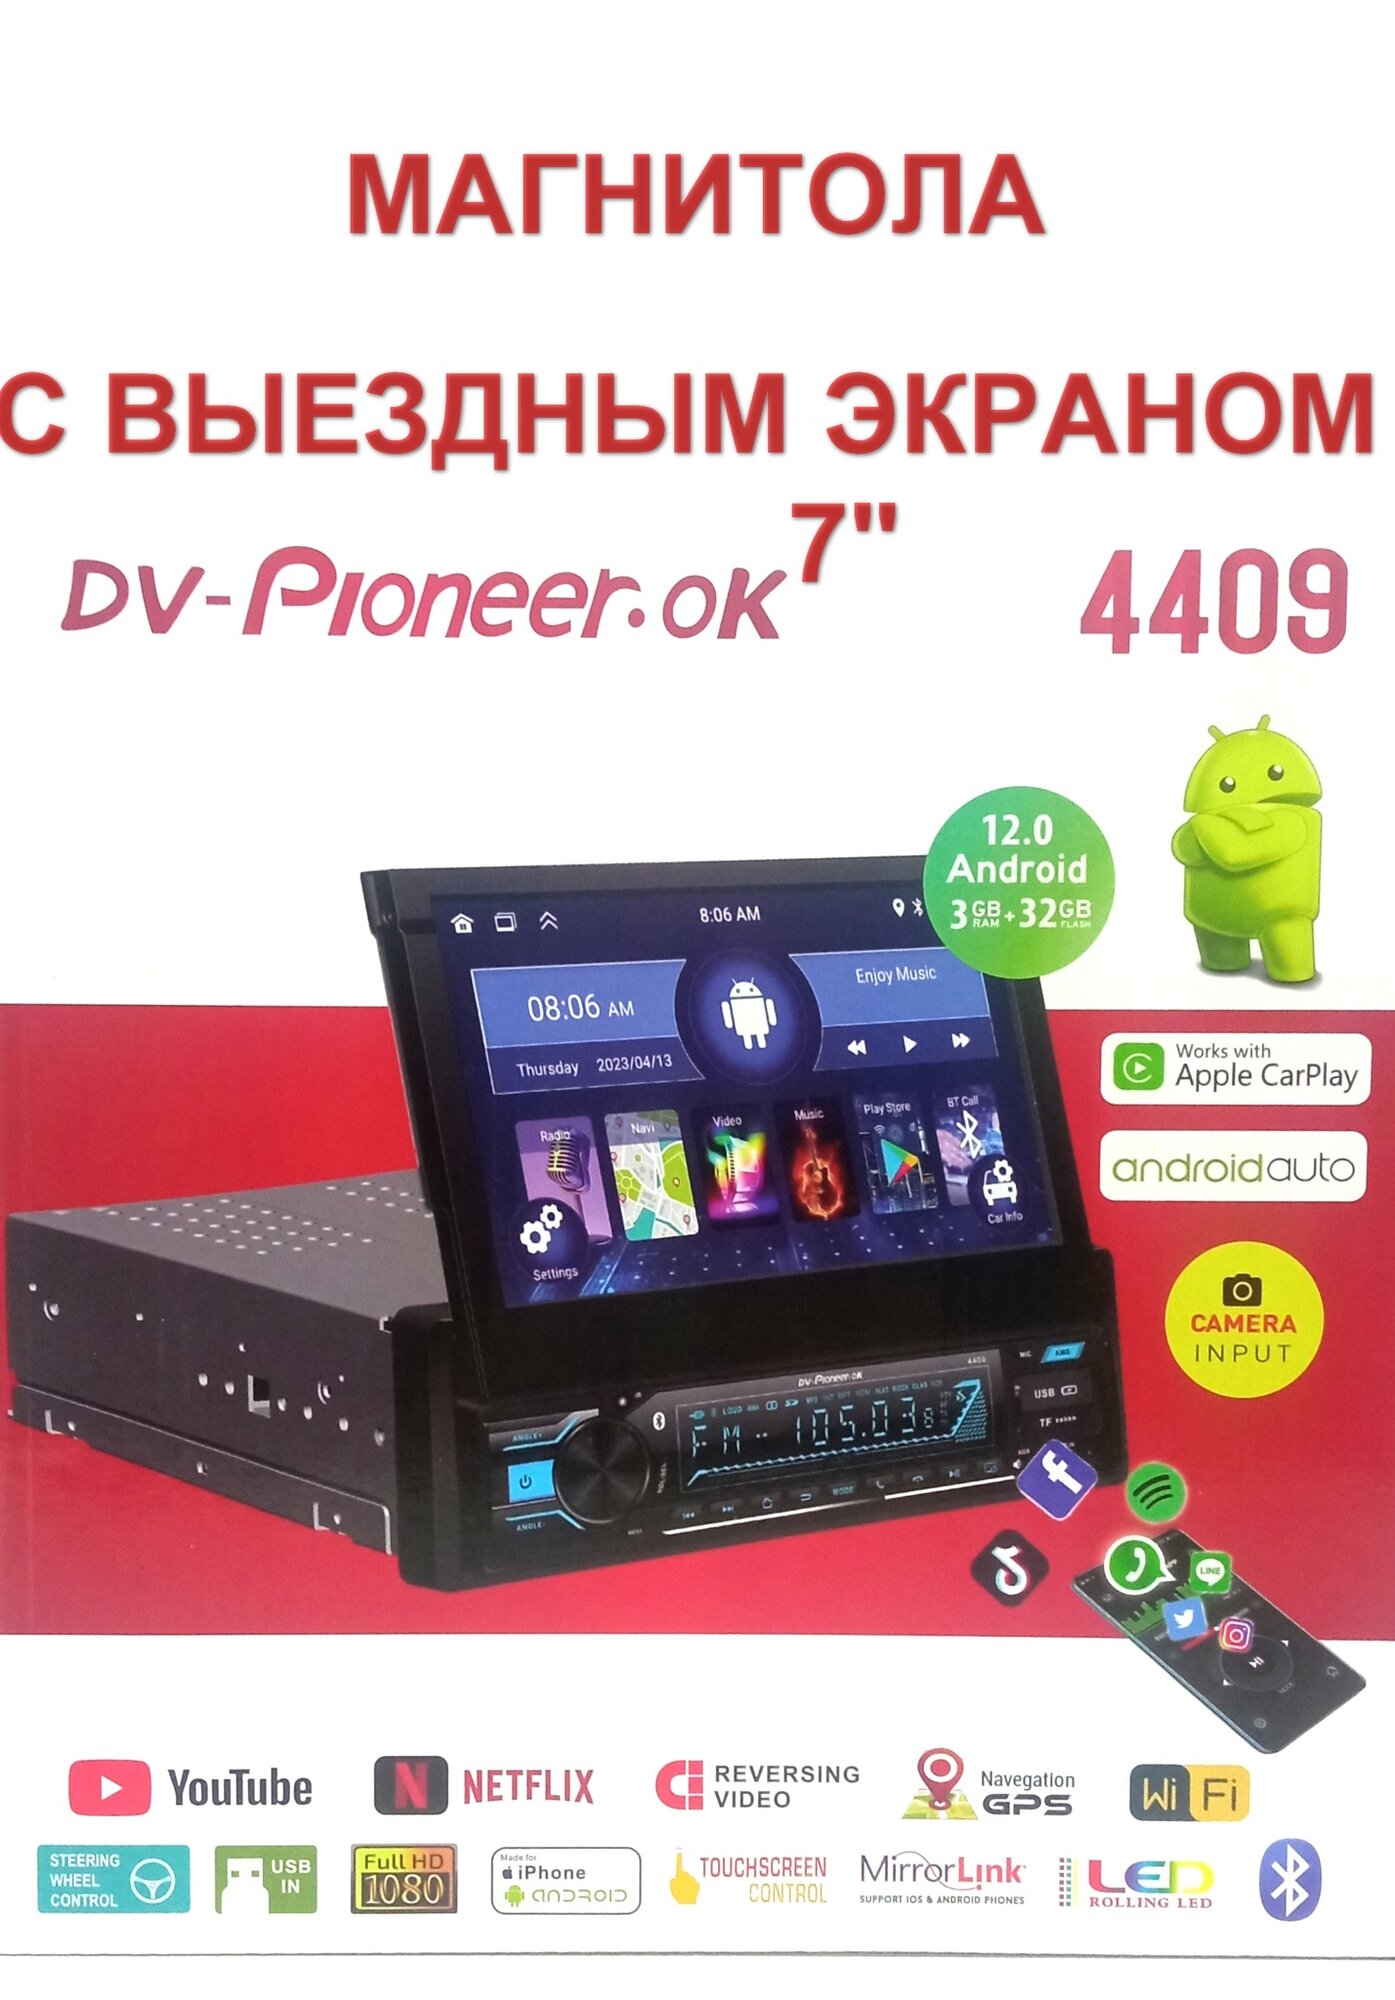 Автомагнитола DV-PioneerOK 4409 Android/3+32GB/Выездной экран.